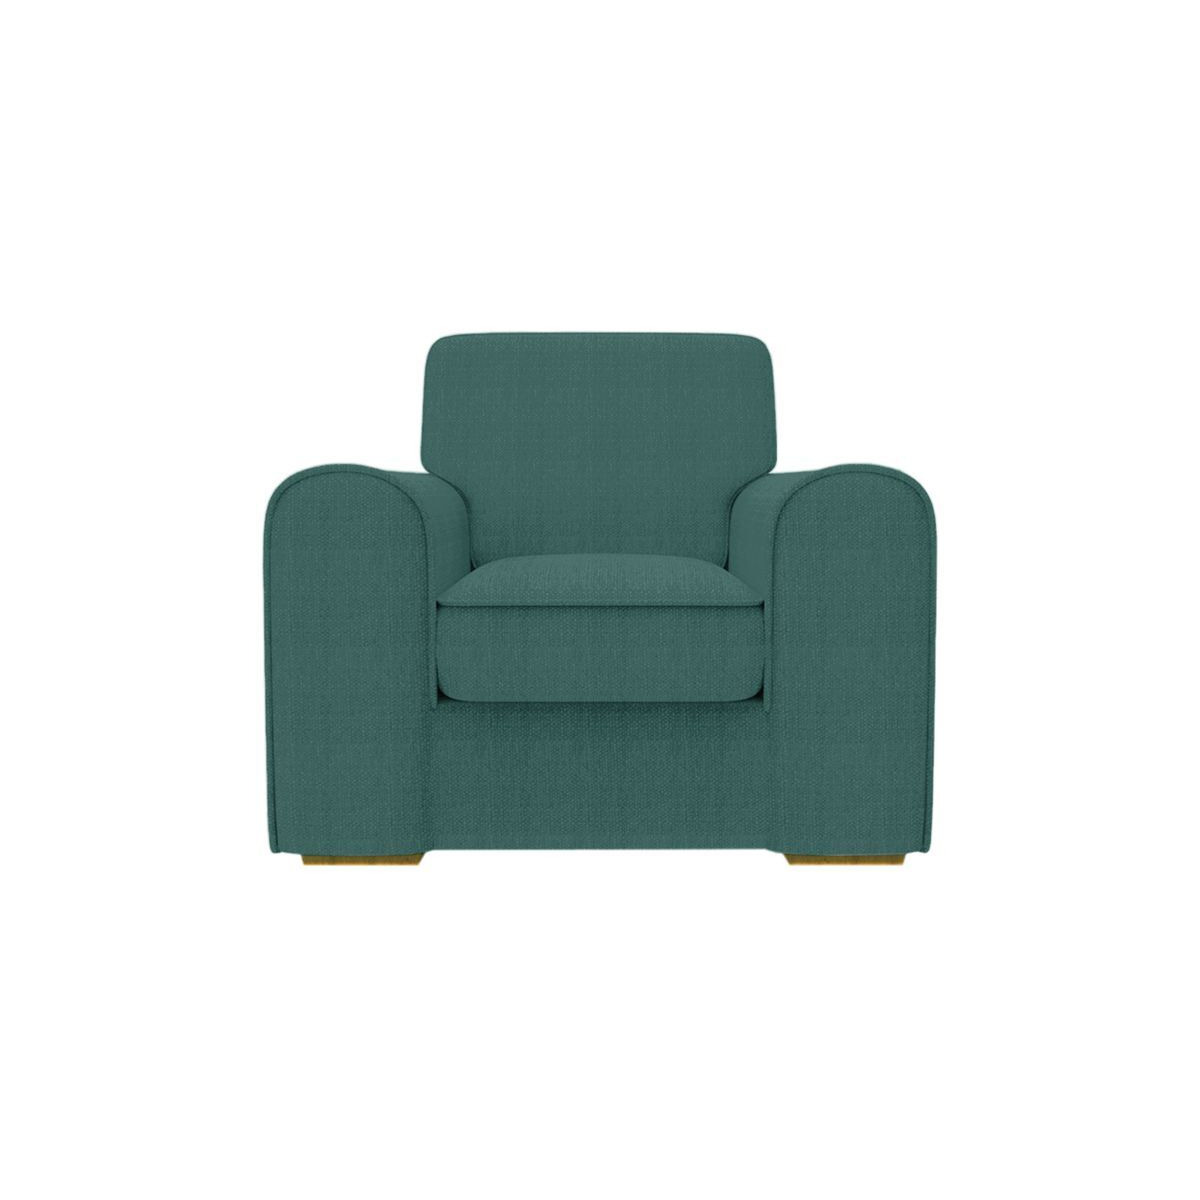 Colista Armchair, turquoise - image 1